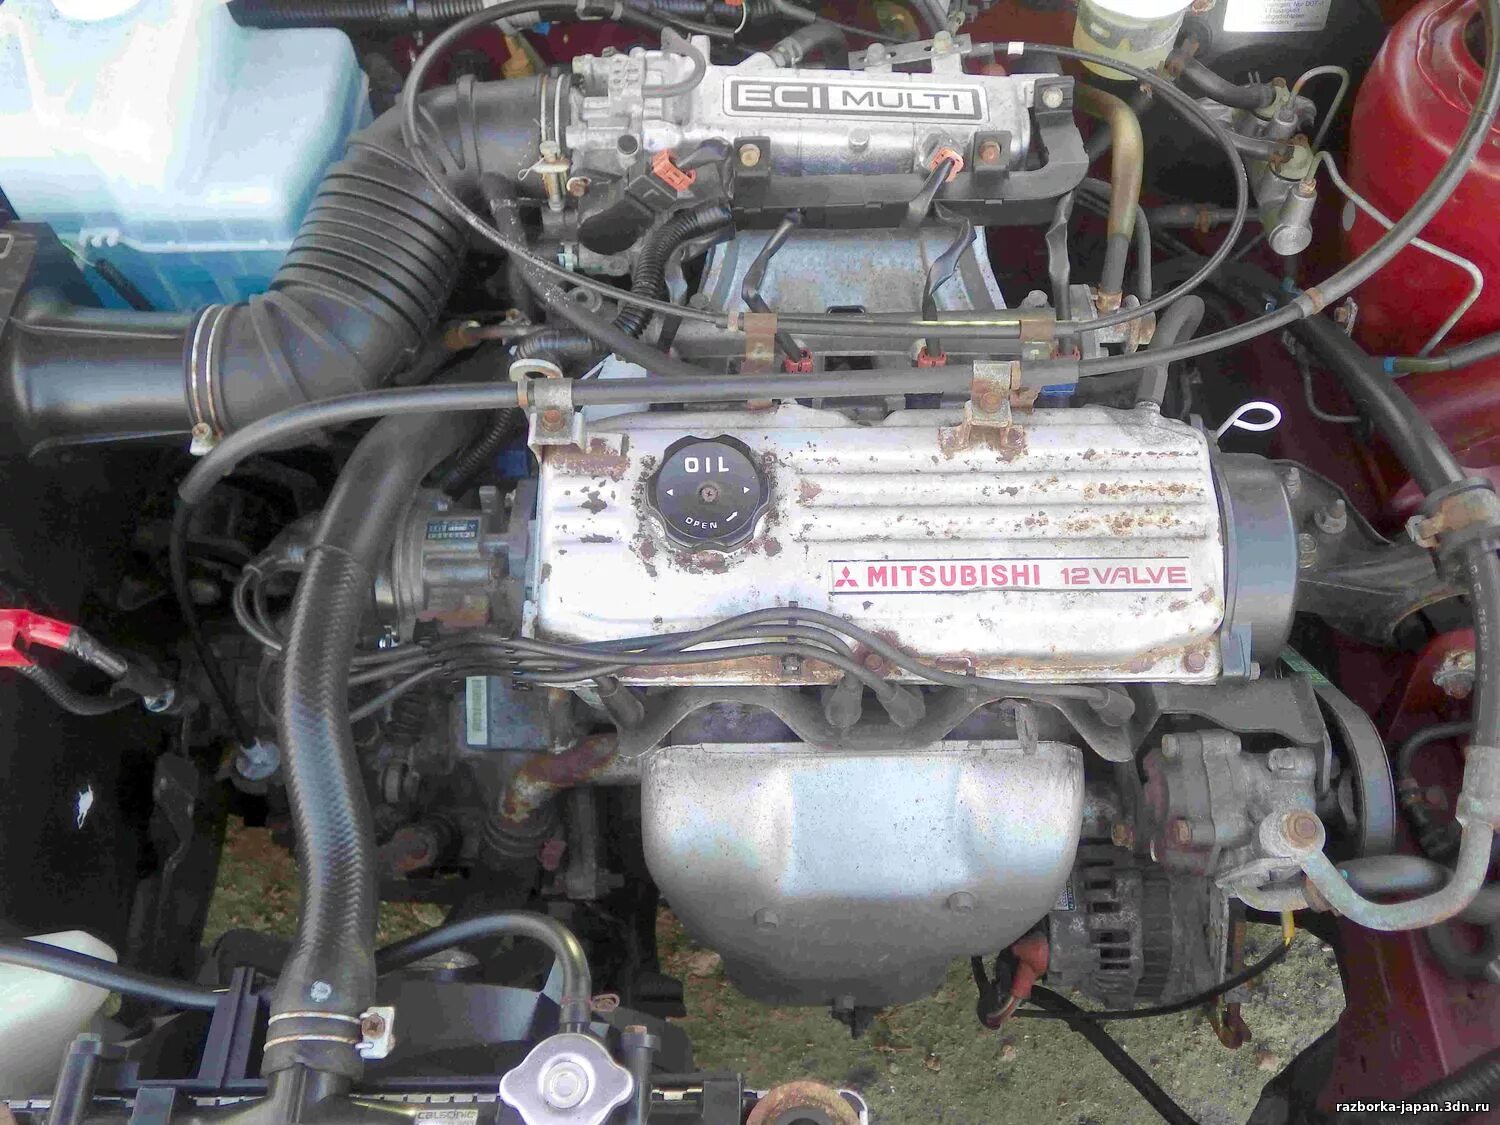 Mitsubishi 4g15. Мотор 4g13 Mitsubishi. Мотор Митсубиси 1.3 4g13. Двигатель 4g15 Mitsubishi. Двигатель 4g13 Mitsubishi Lancer.